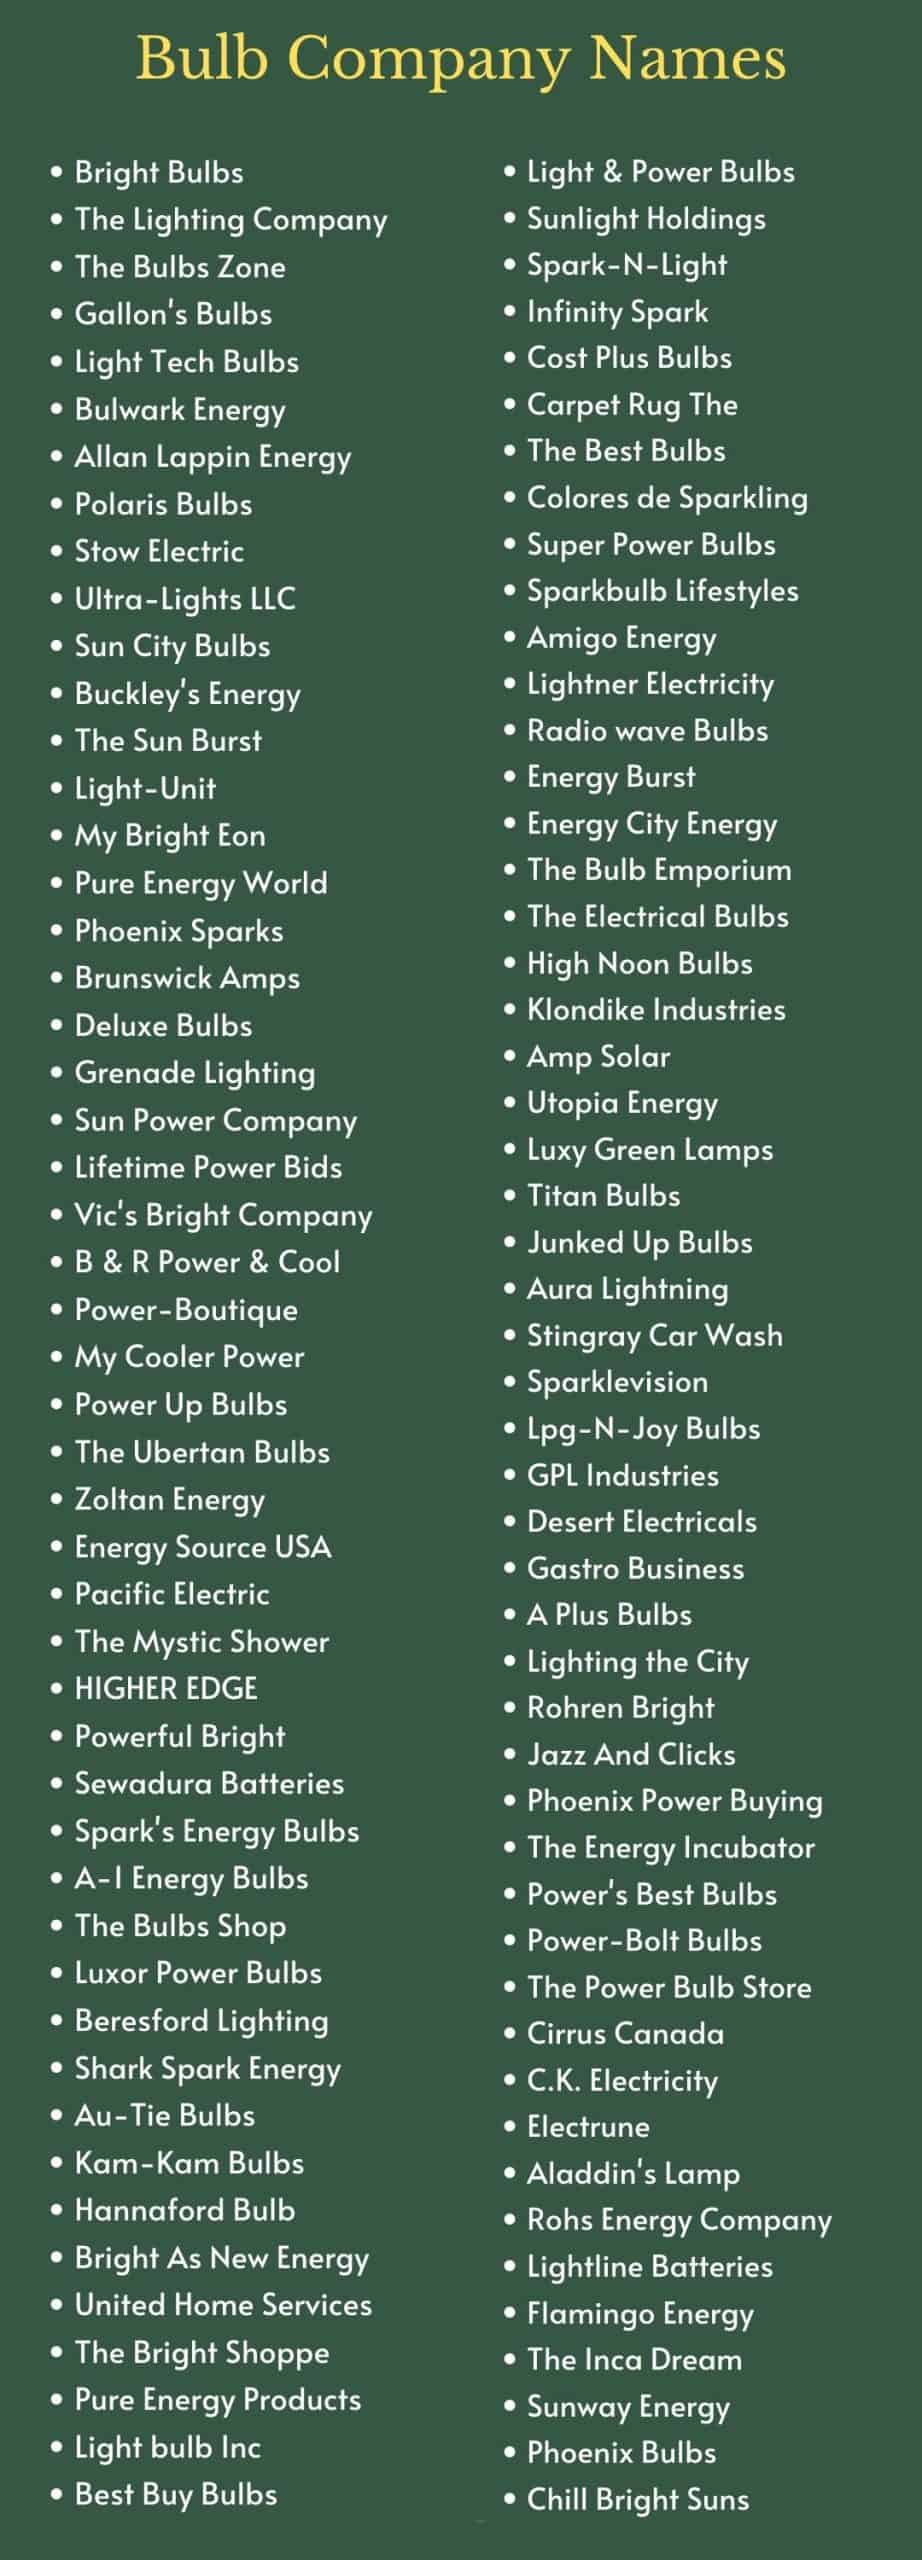 Bulb Company Names